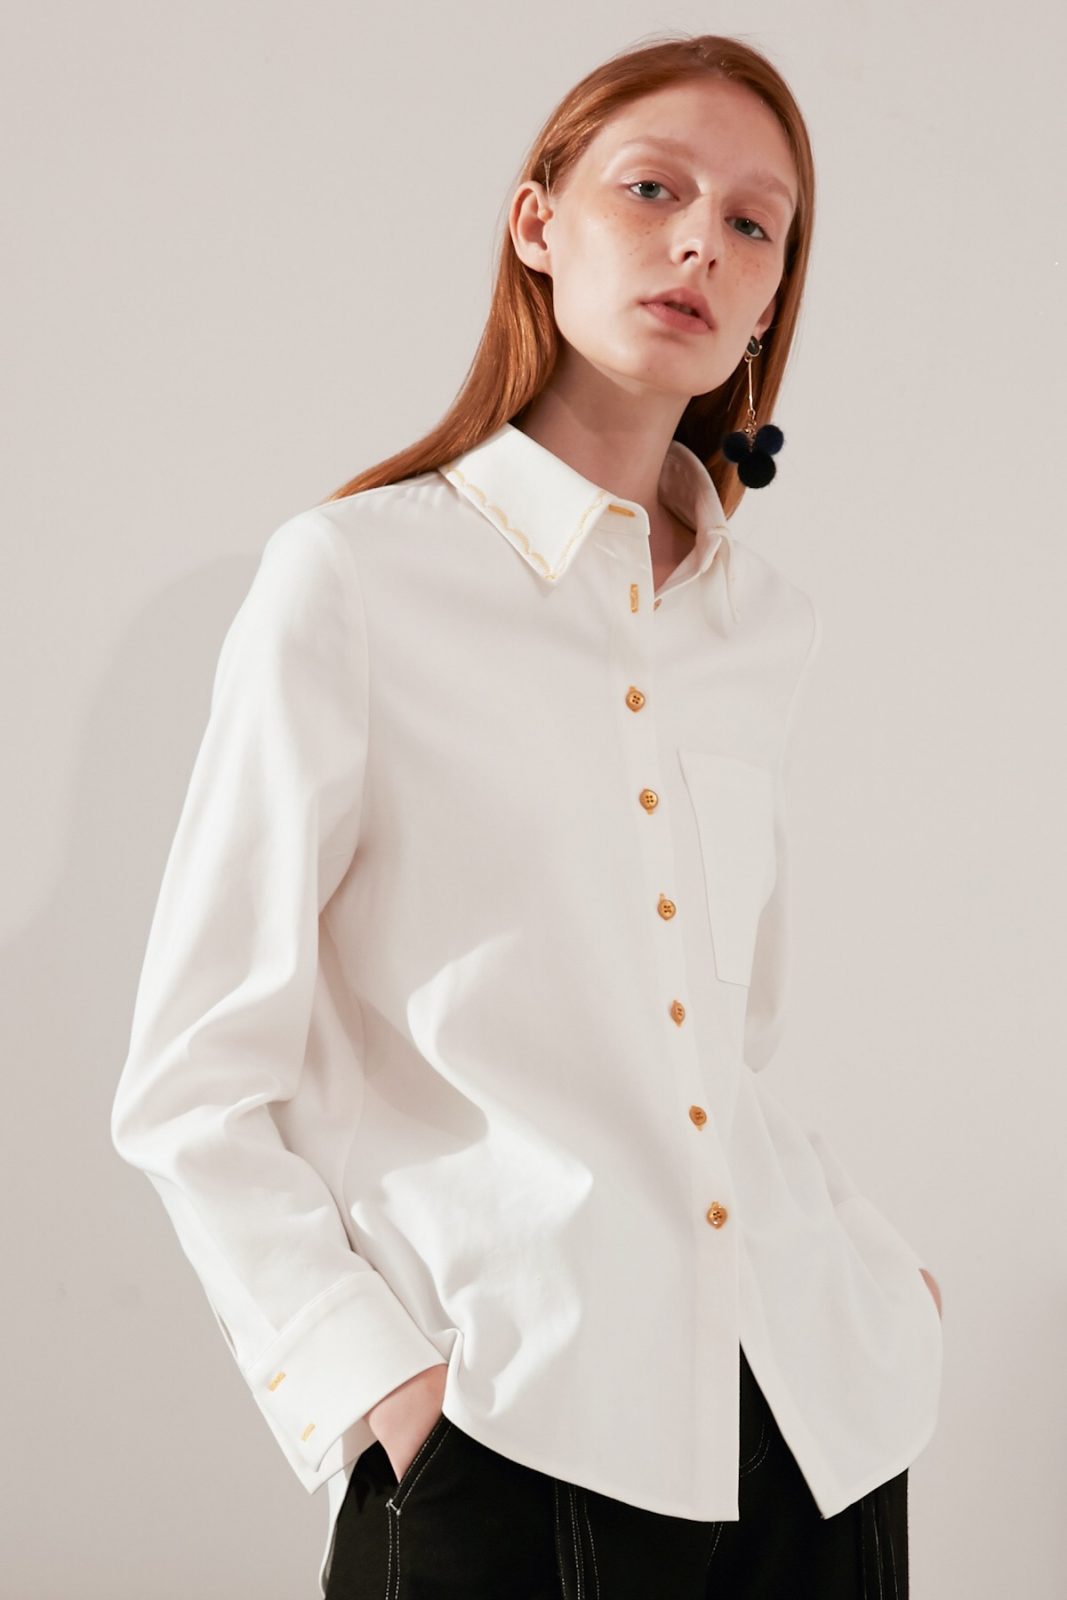 SKYE modern minimalist women fashion long sleeve shirt with gold embroidered collar white 2